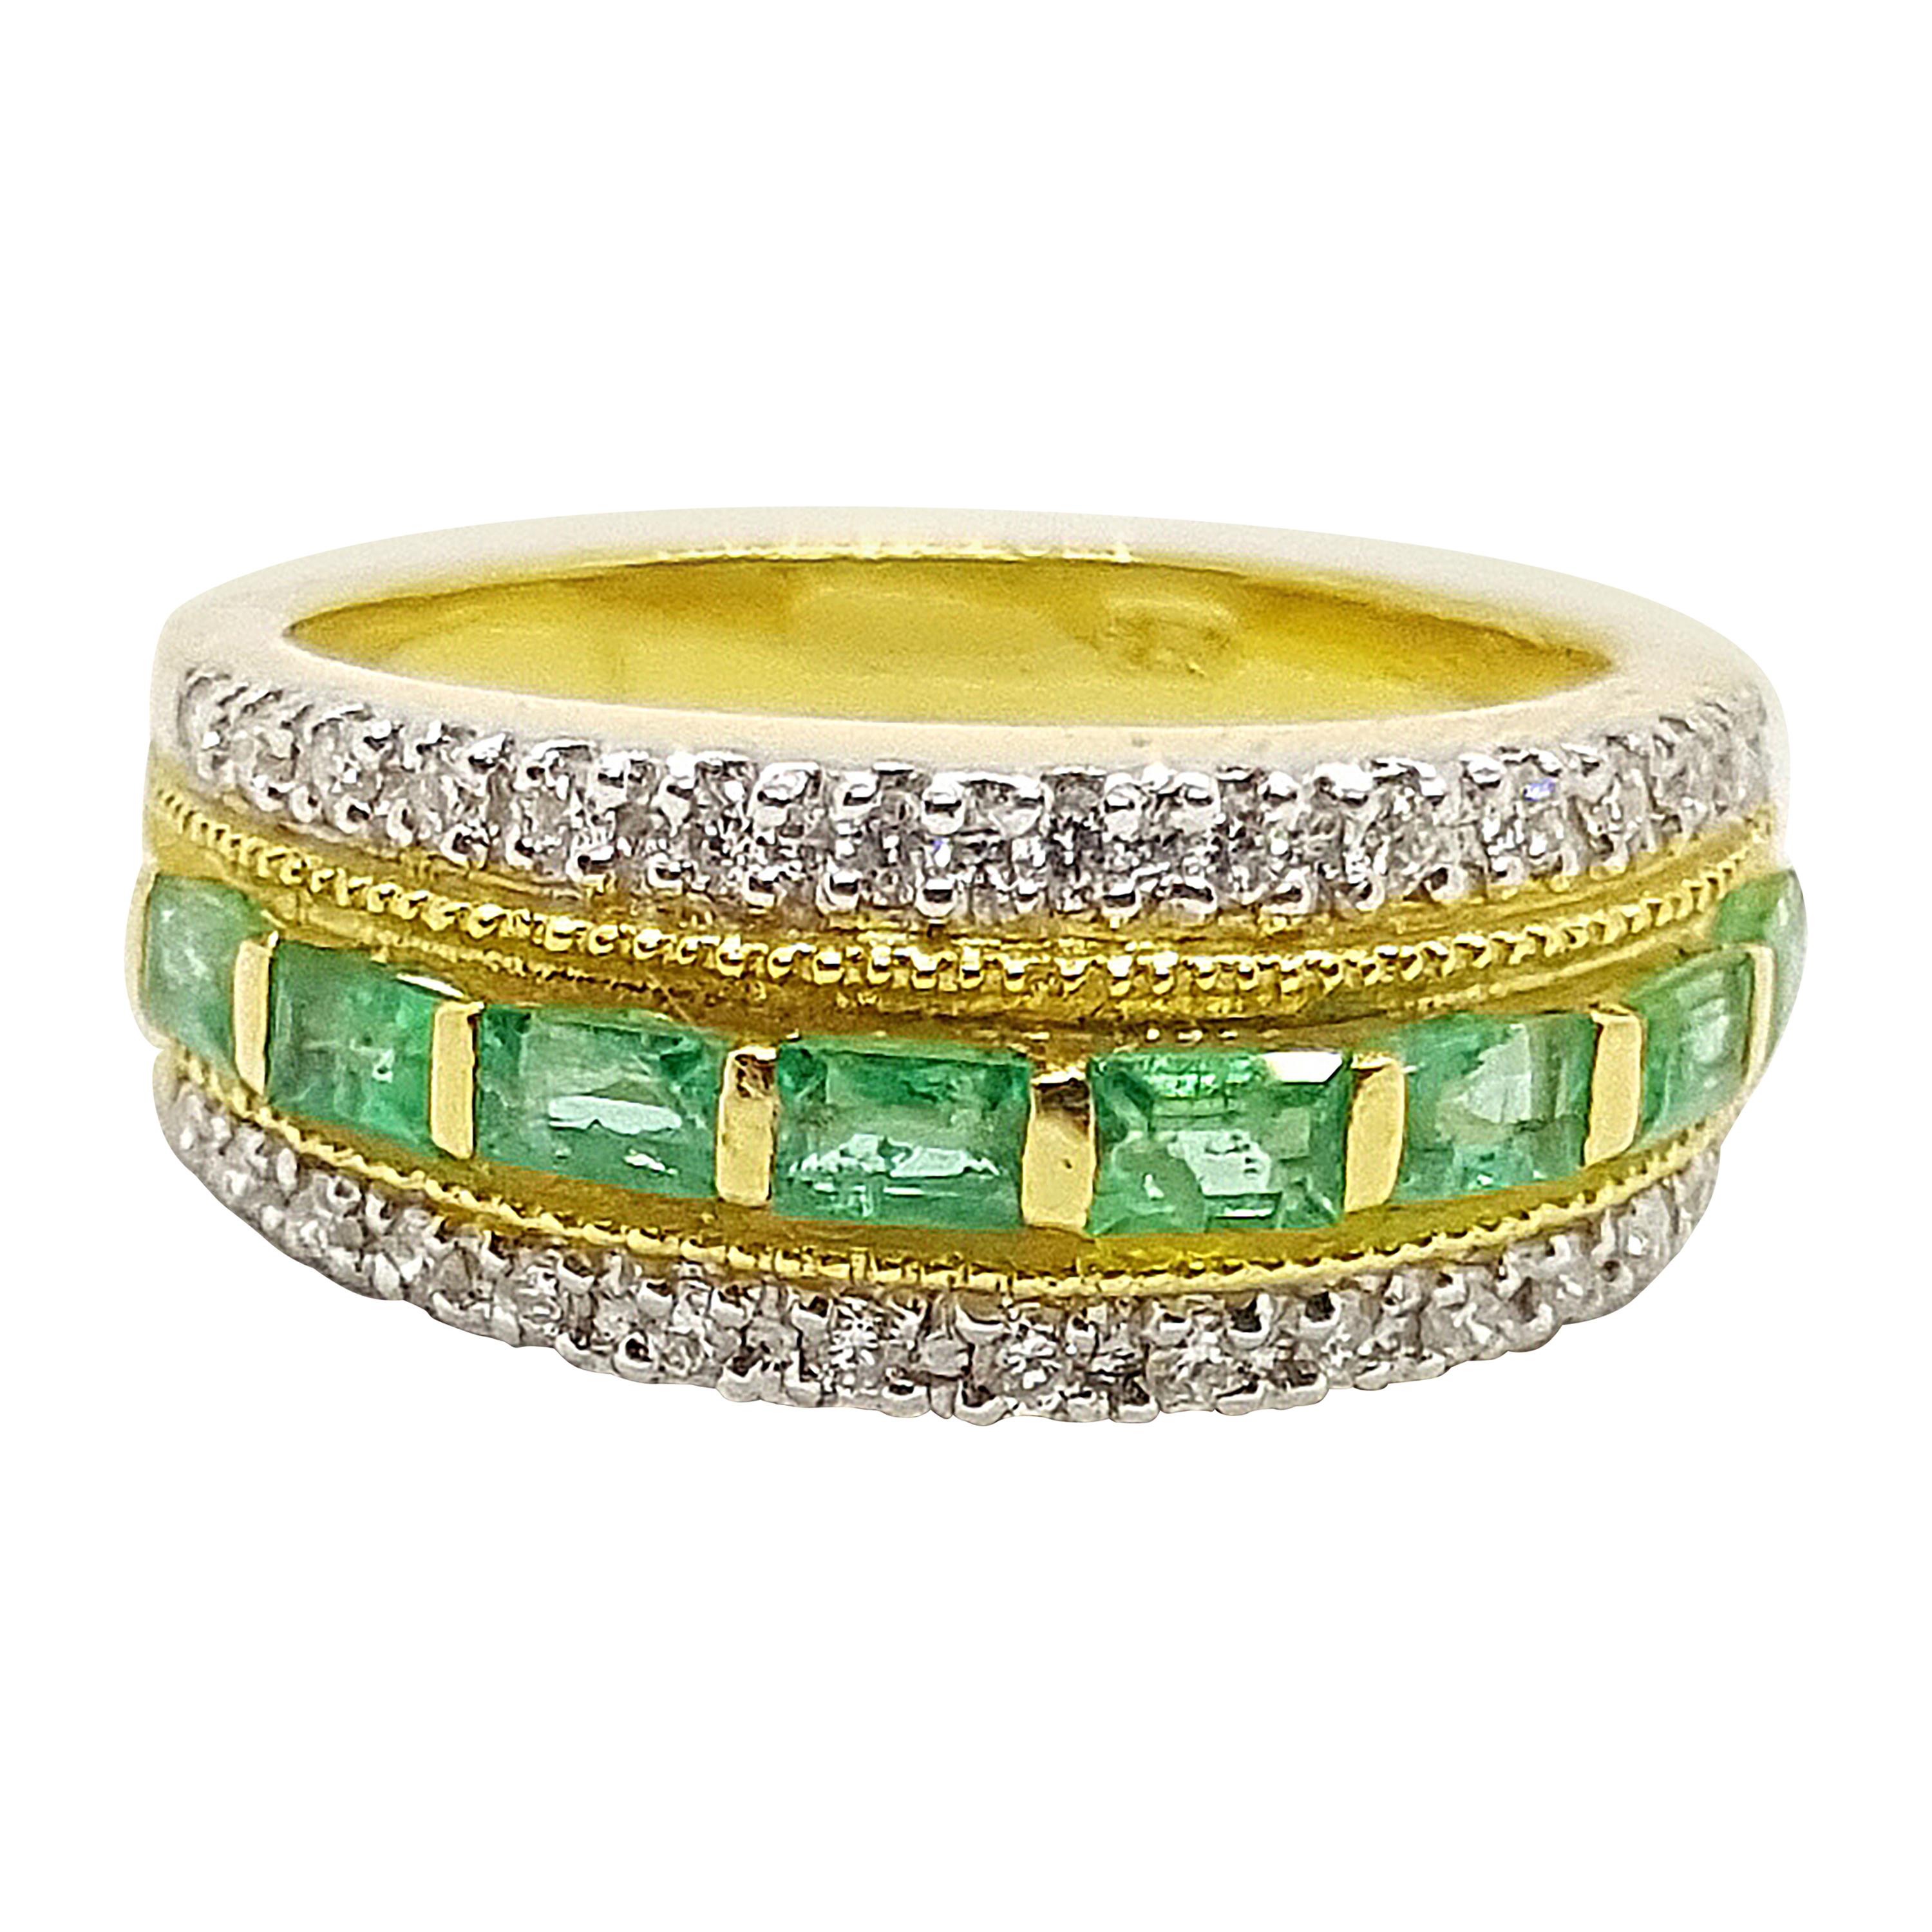 Emerald 0.68 Carat with Diamond 0.26 Carat Ring Set in 18 Karat Gold Settings